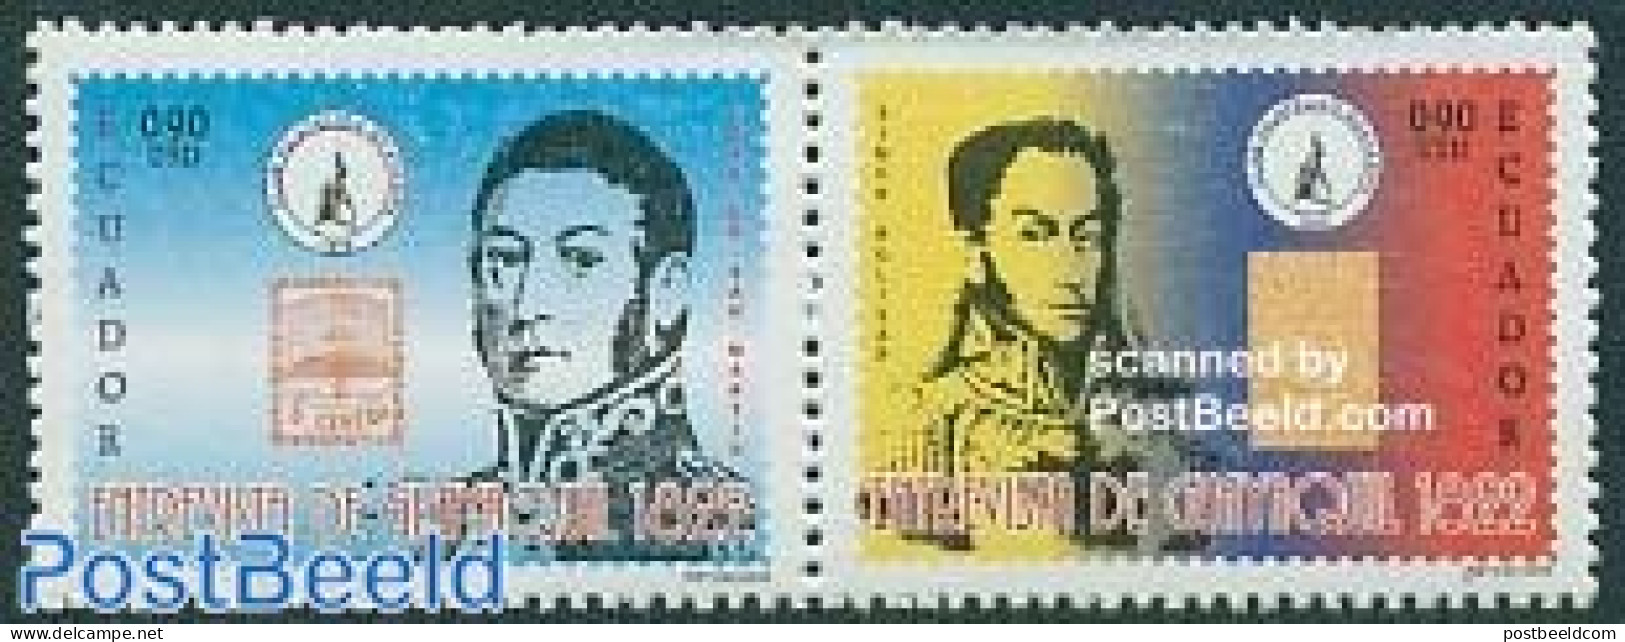 Ecuador 2005 Guayaquil 2v [:], Mint NH, History - History - Stamps On Stamps - Stamps On Stamps